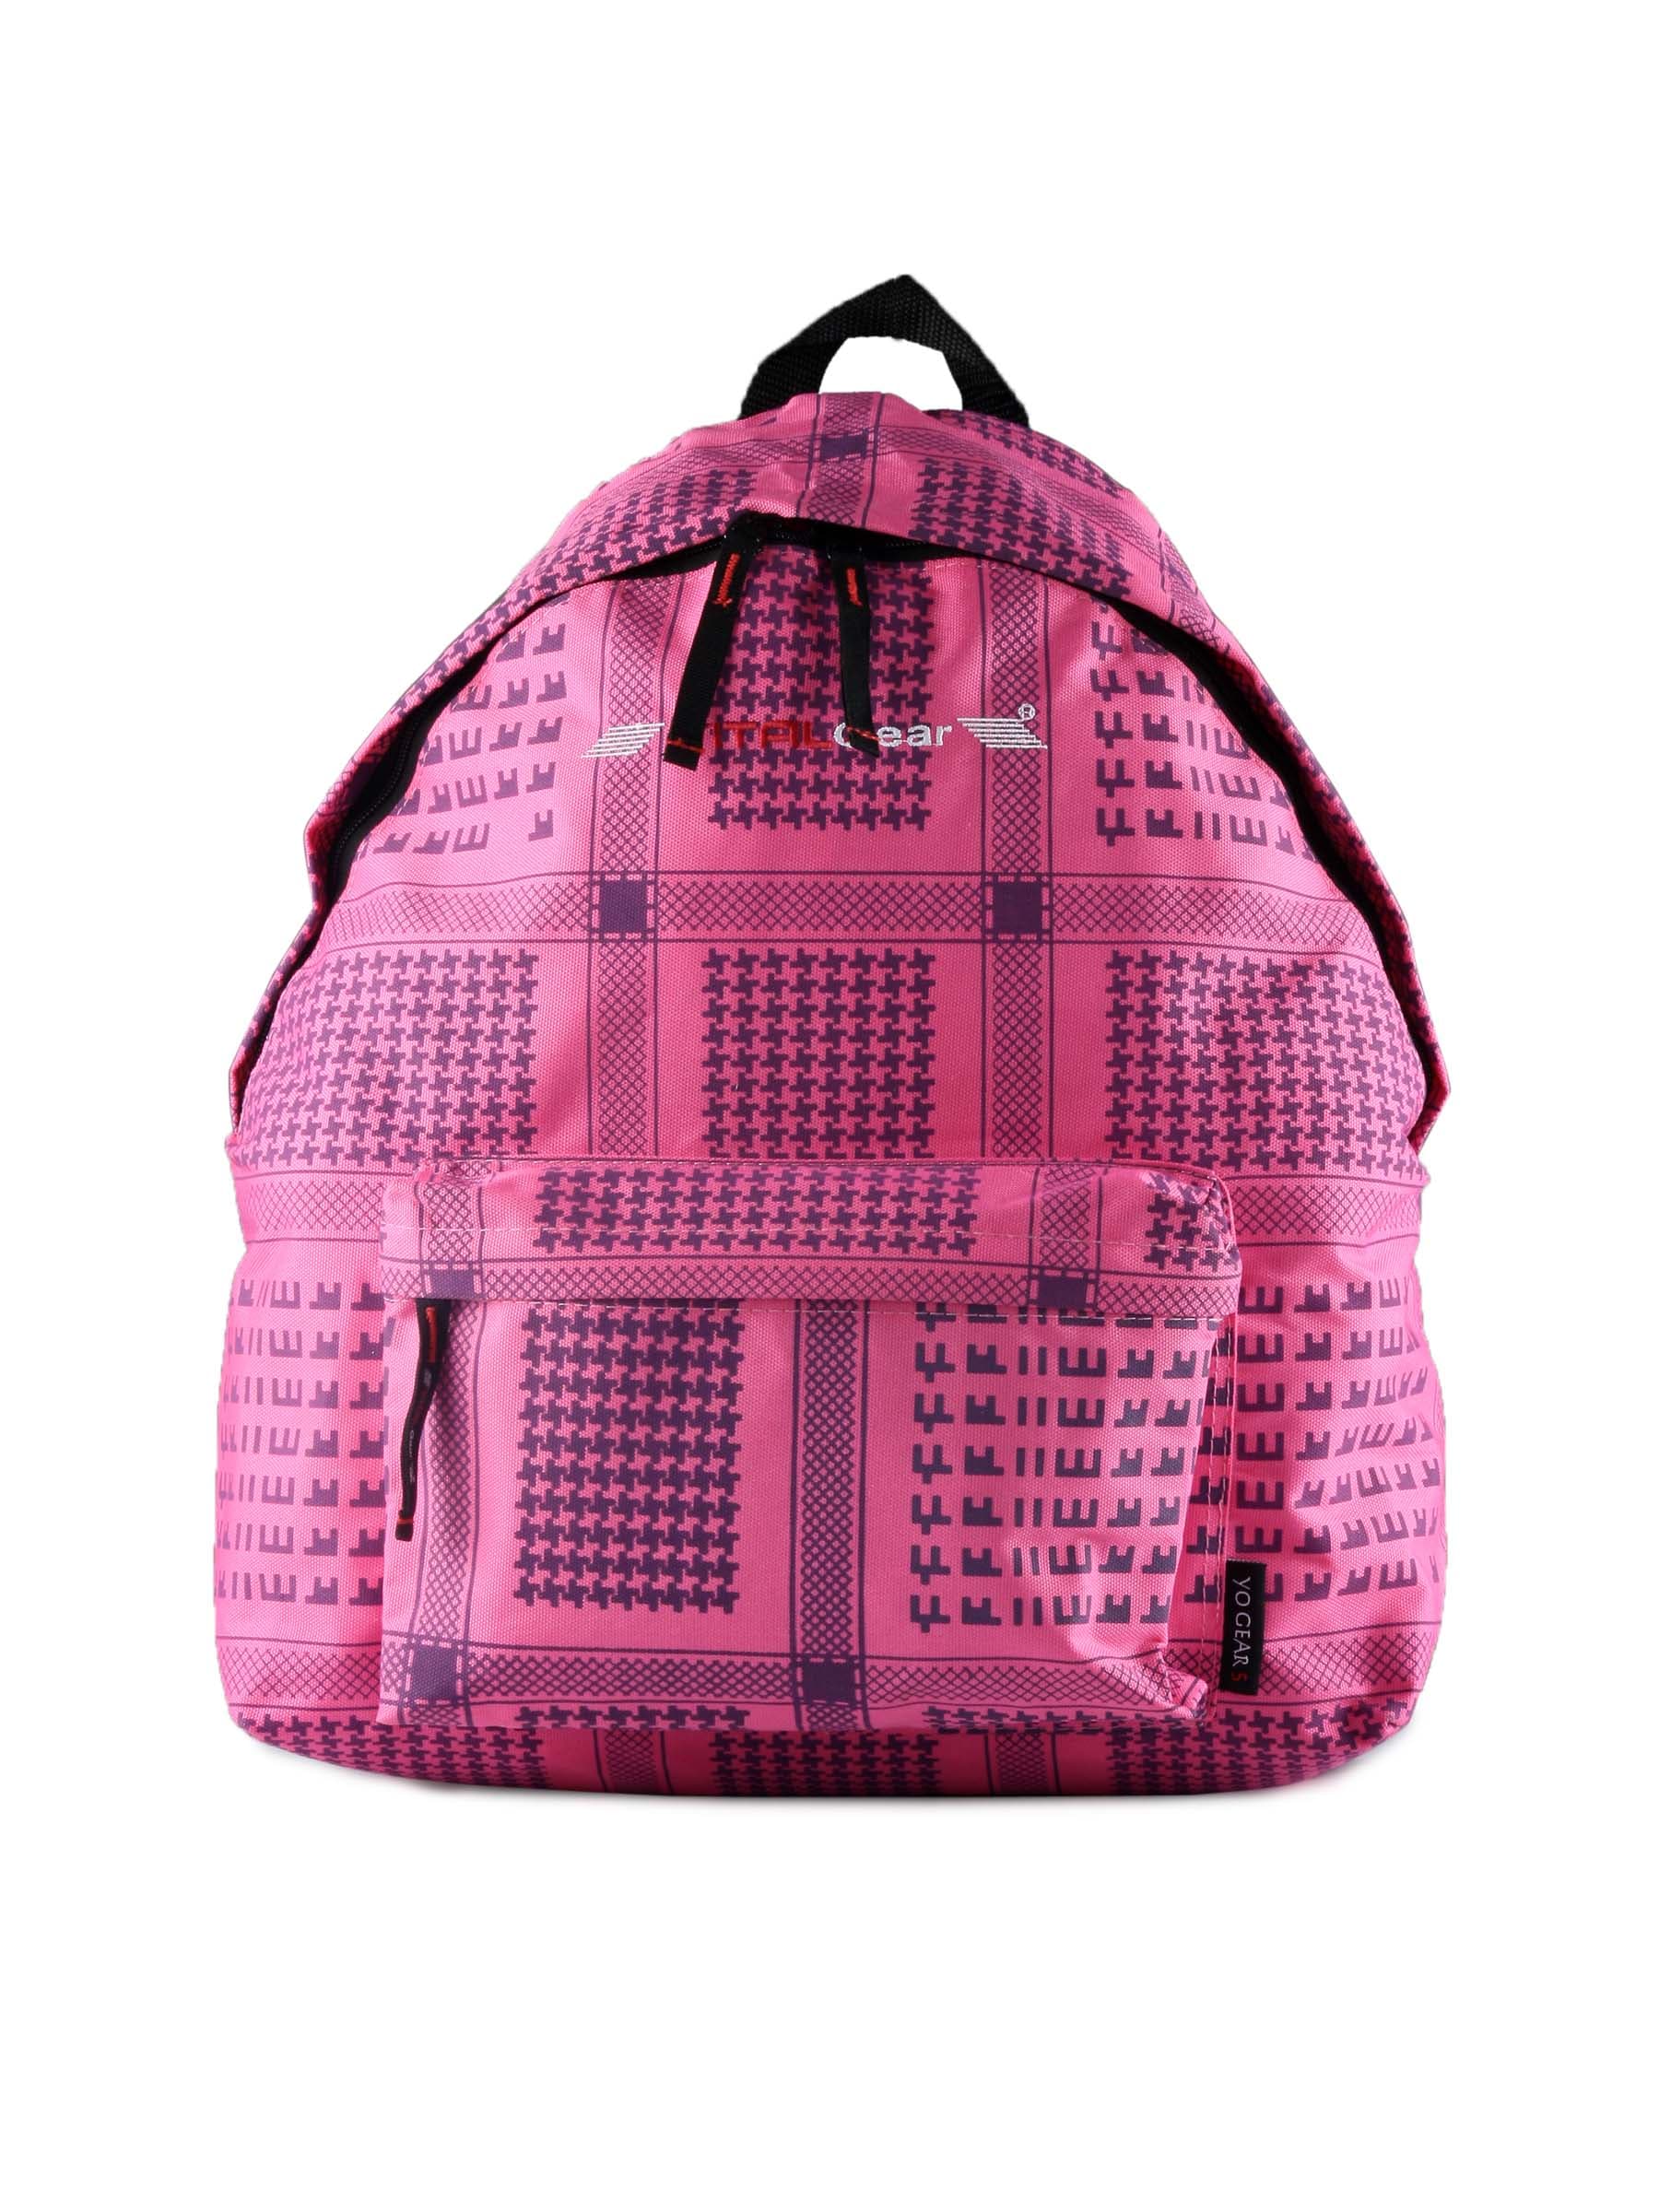 Vital Gear Unisex Pink Daypack Backpack